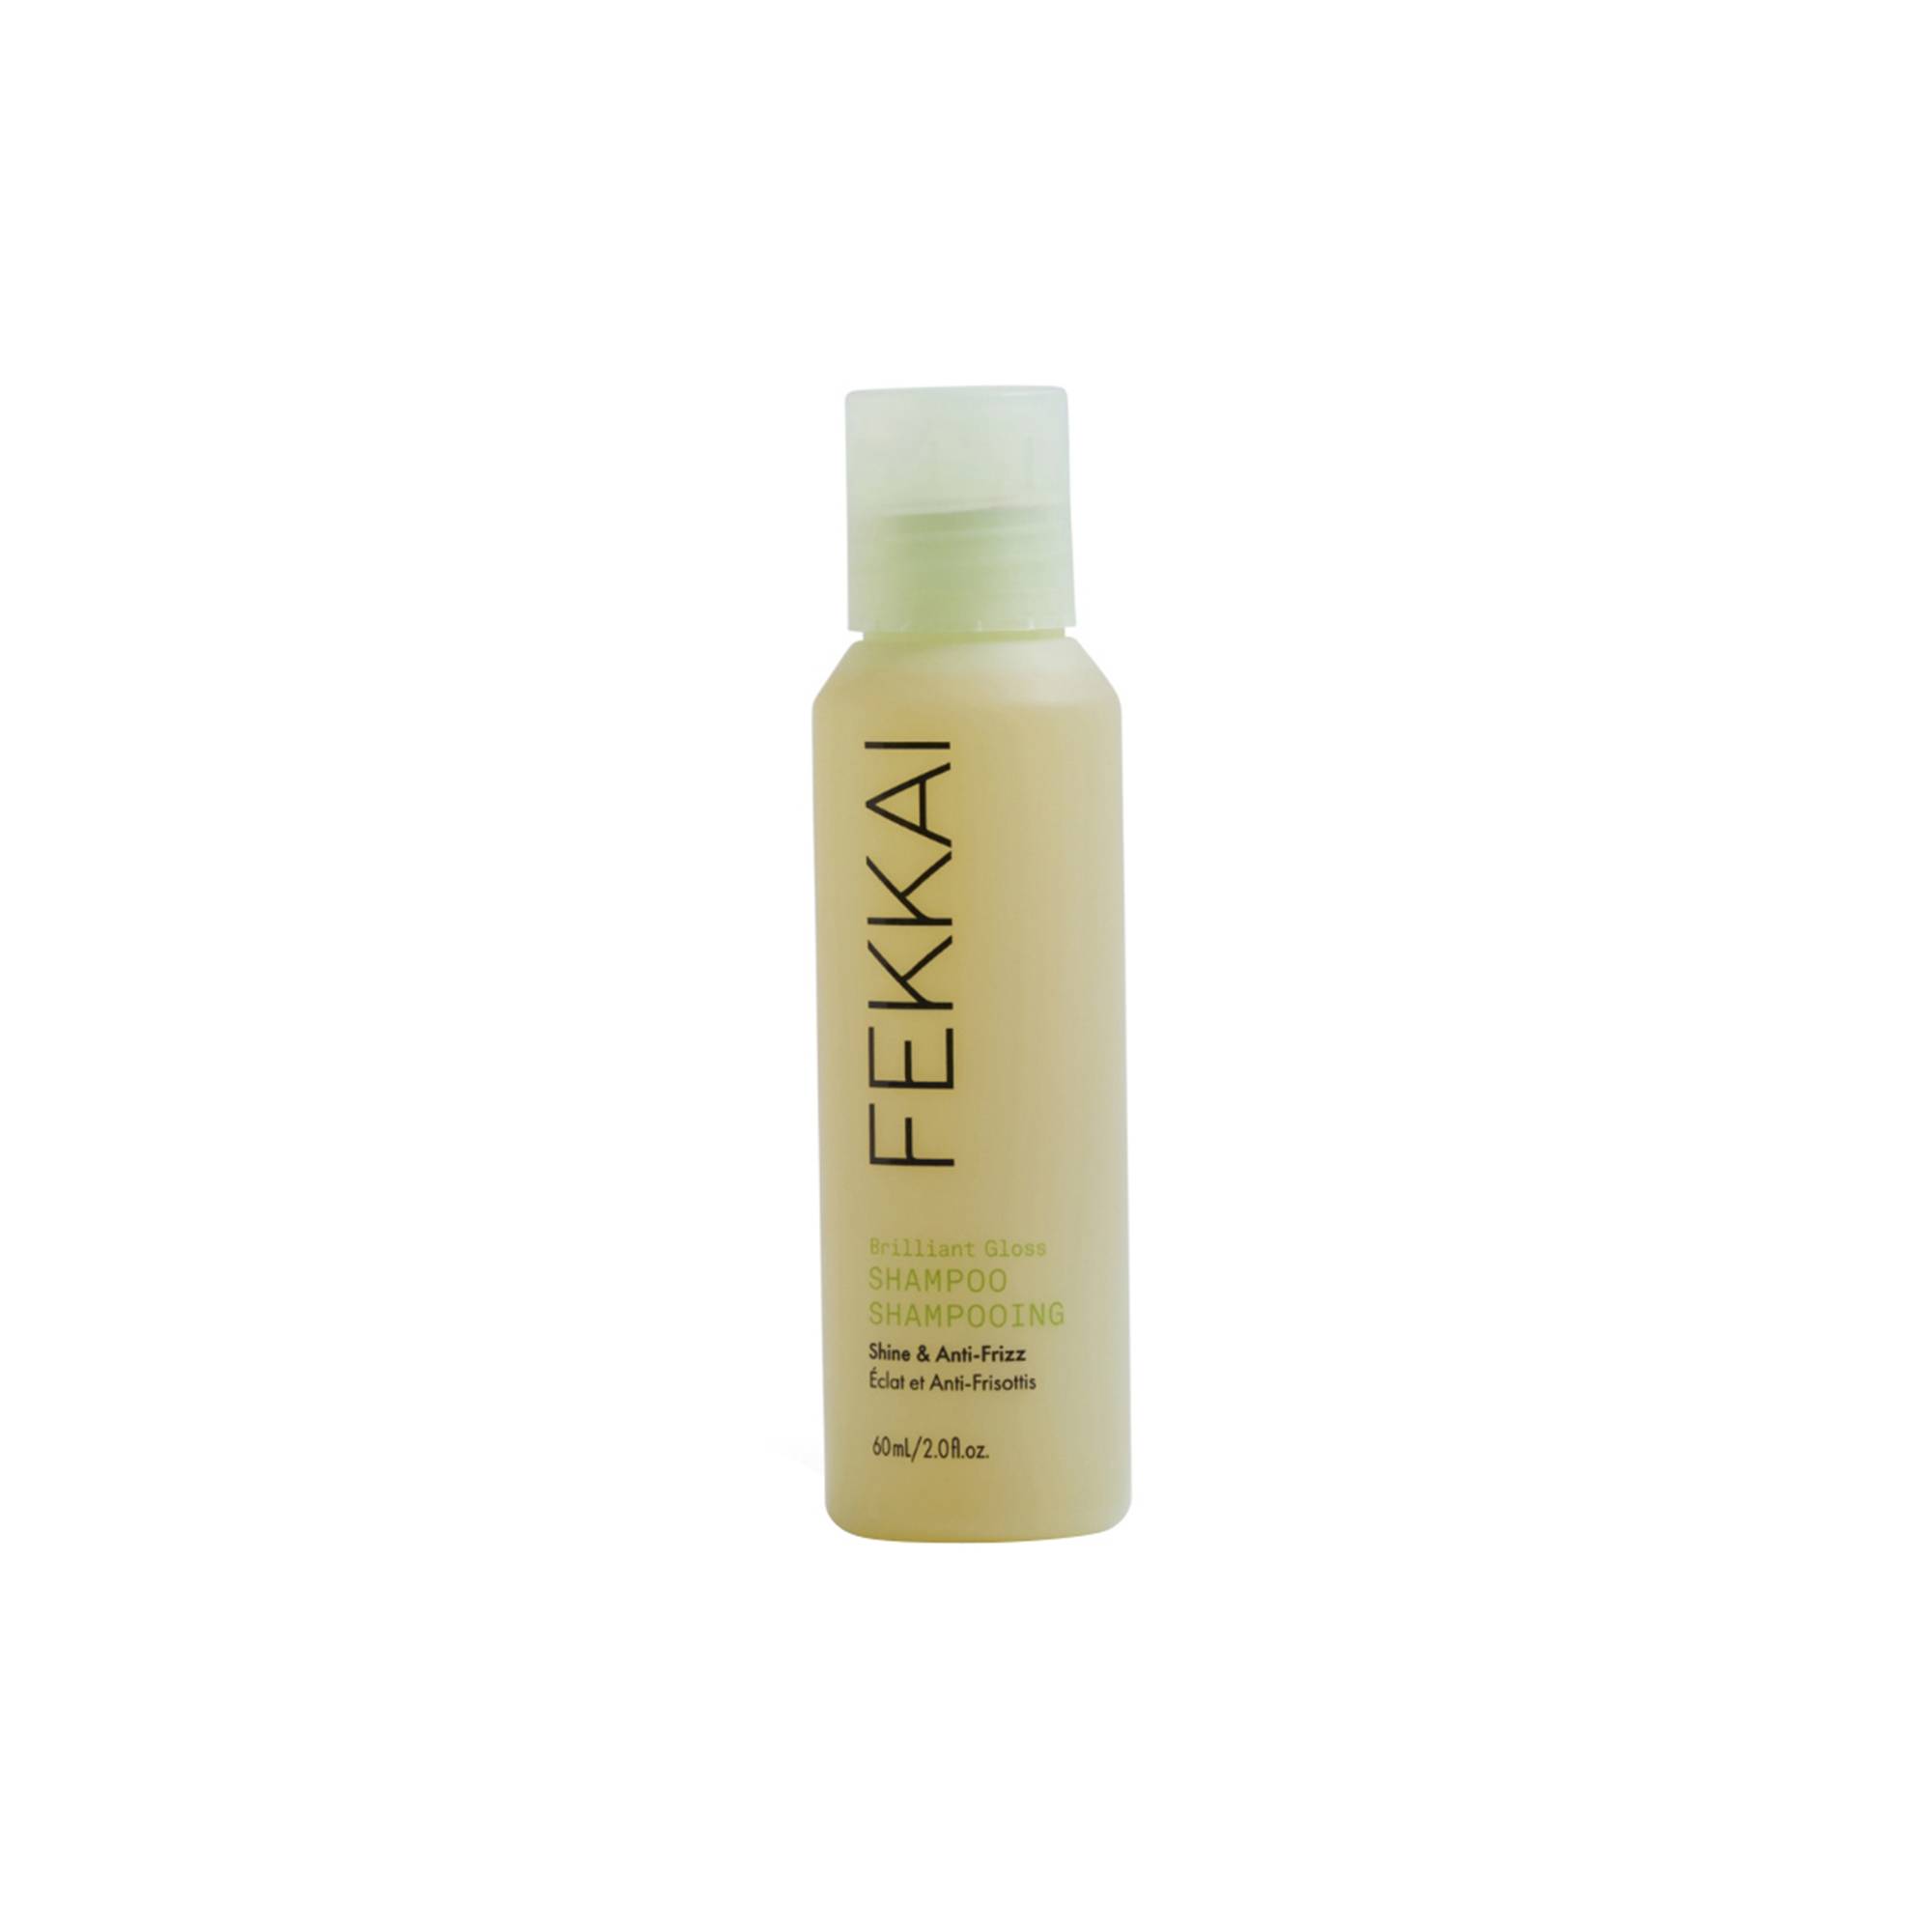 Shampoing brillance et anti-frisottis Brilliant Gloss de la marque Fekkai Contenance 60ml - 1